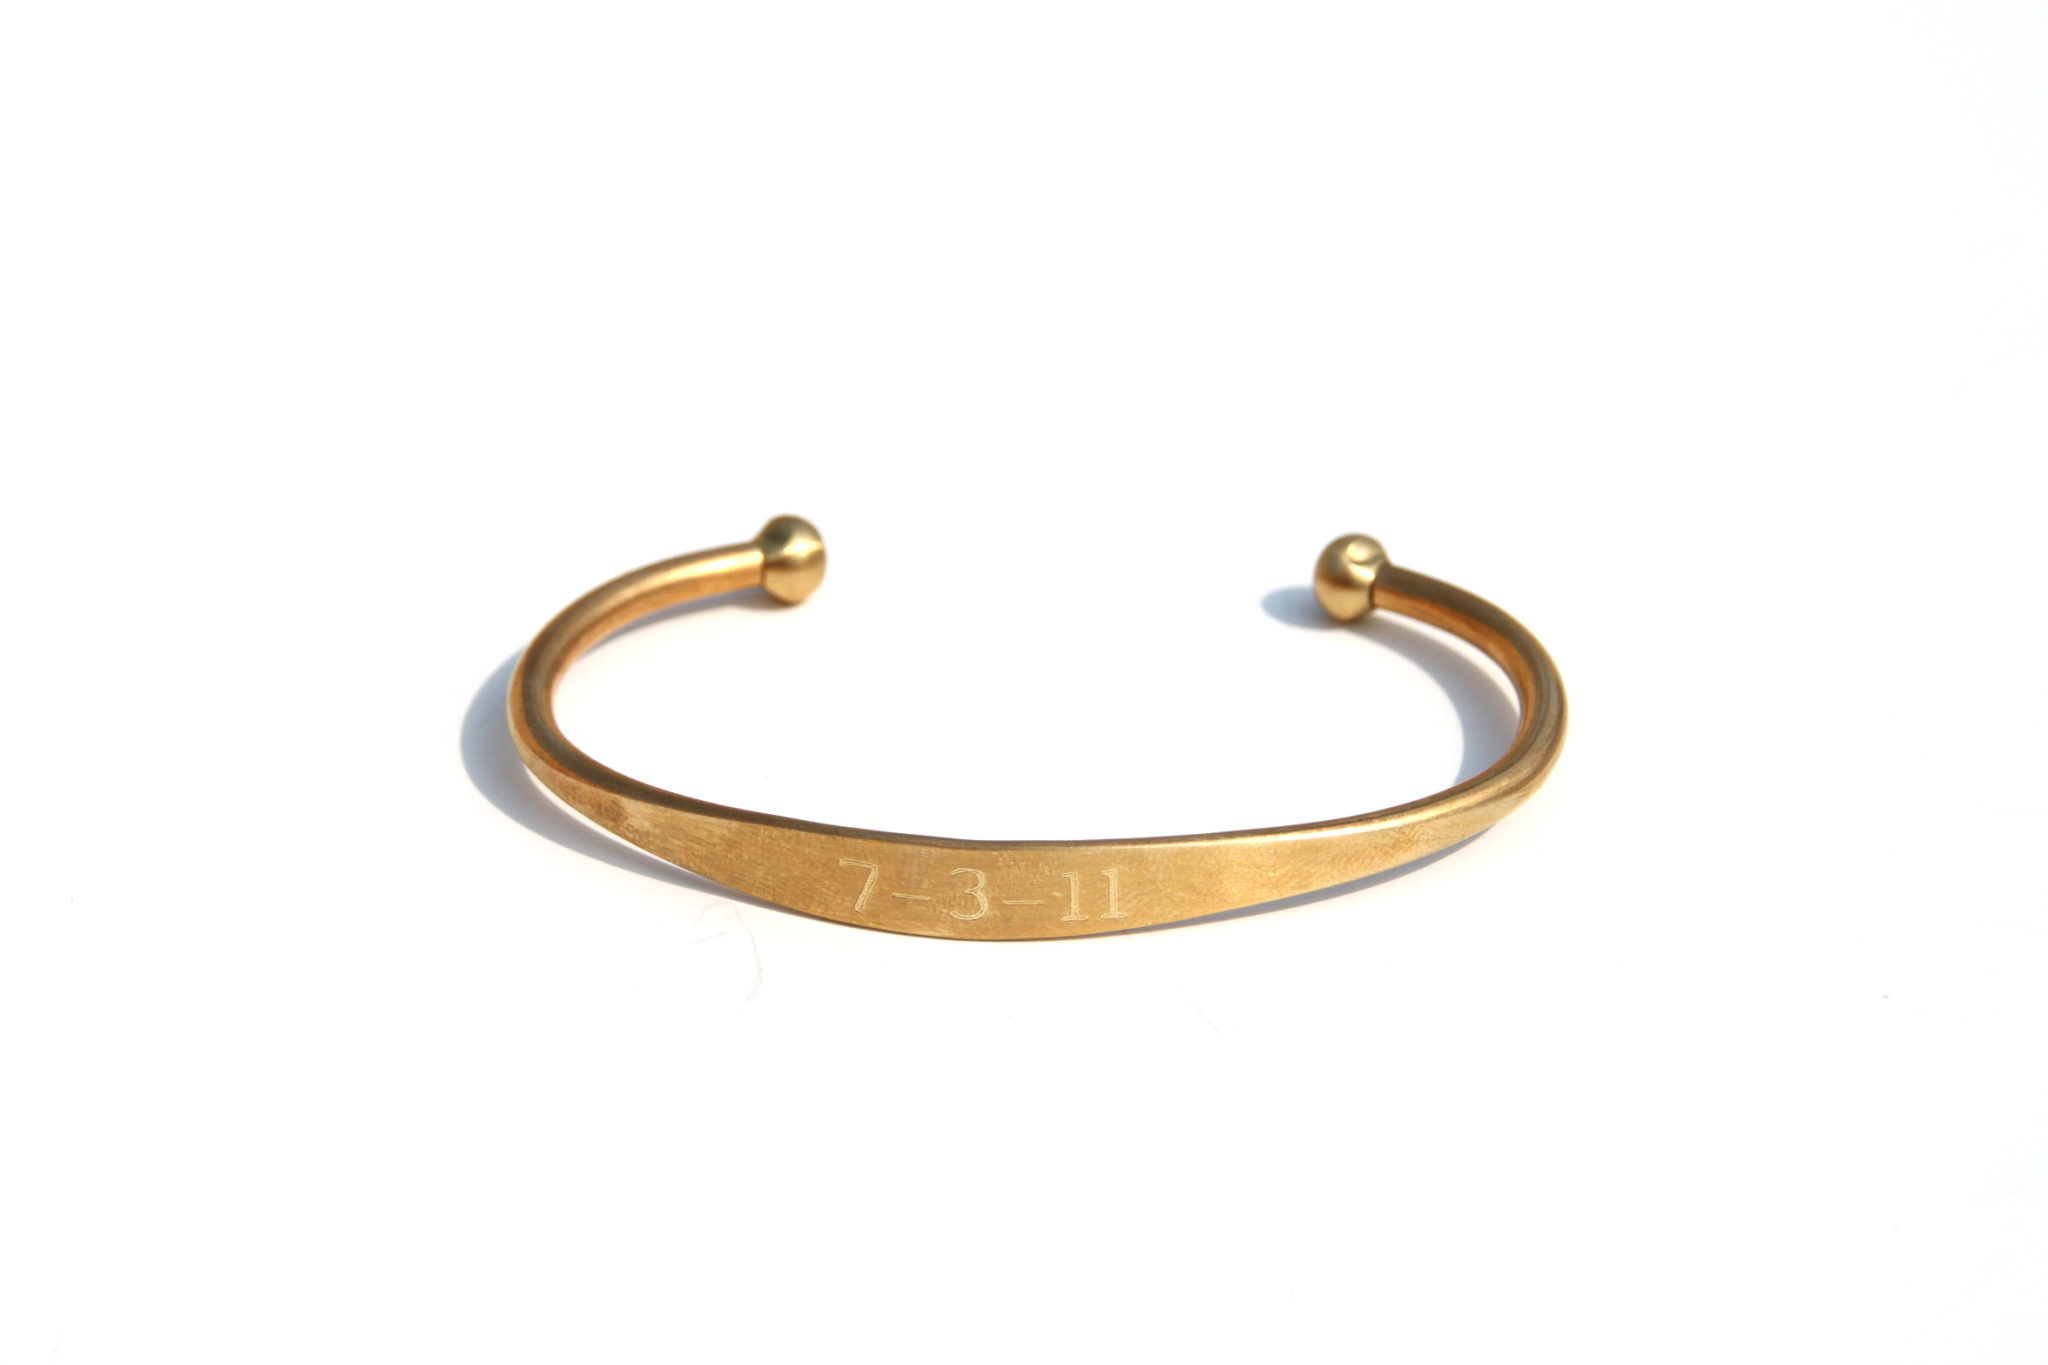 Textile Tenor Brass Bracelet – Ericka C Wise, $5 Jewelry